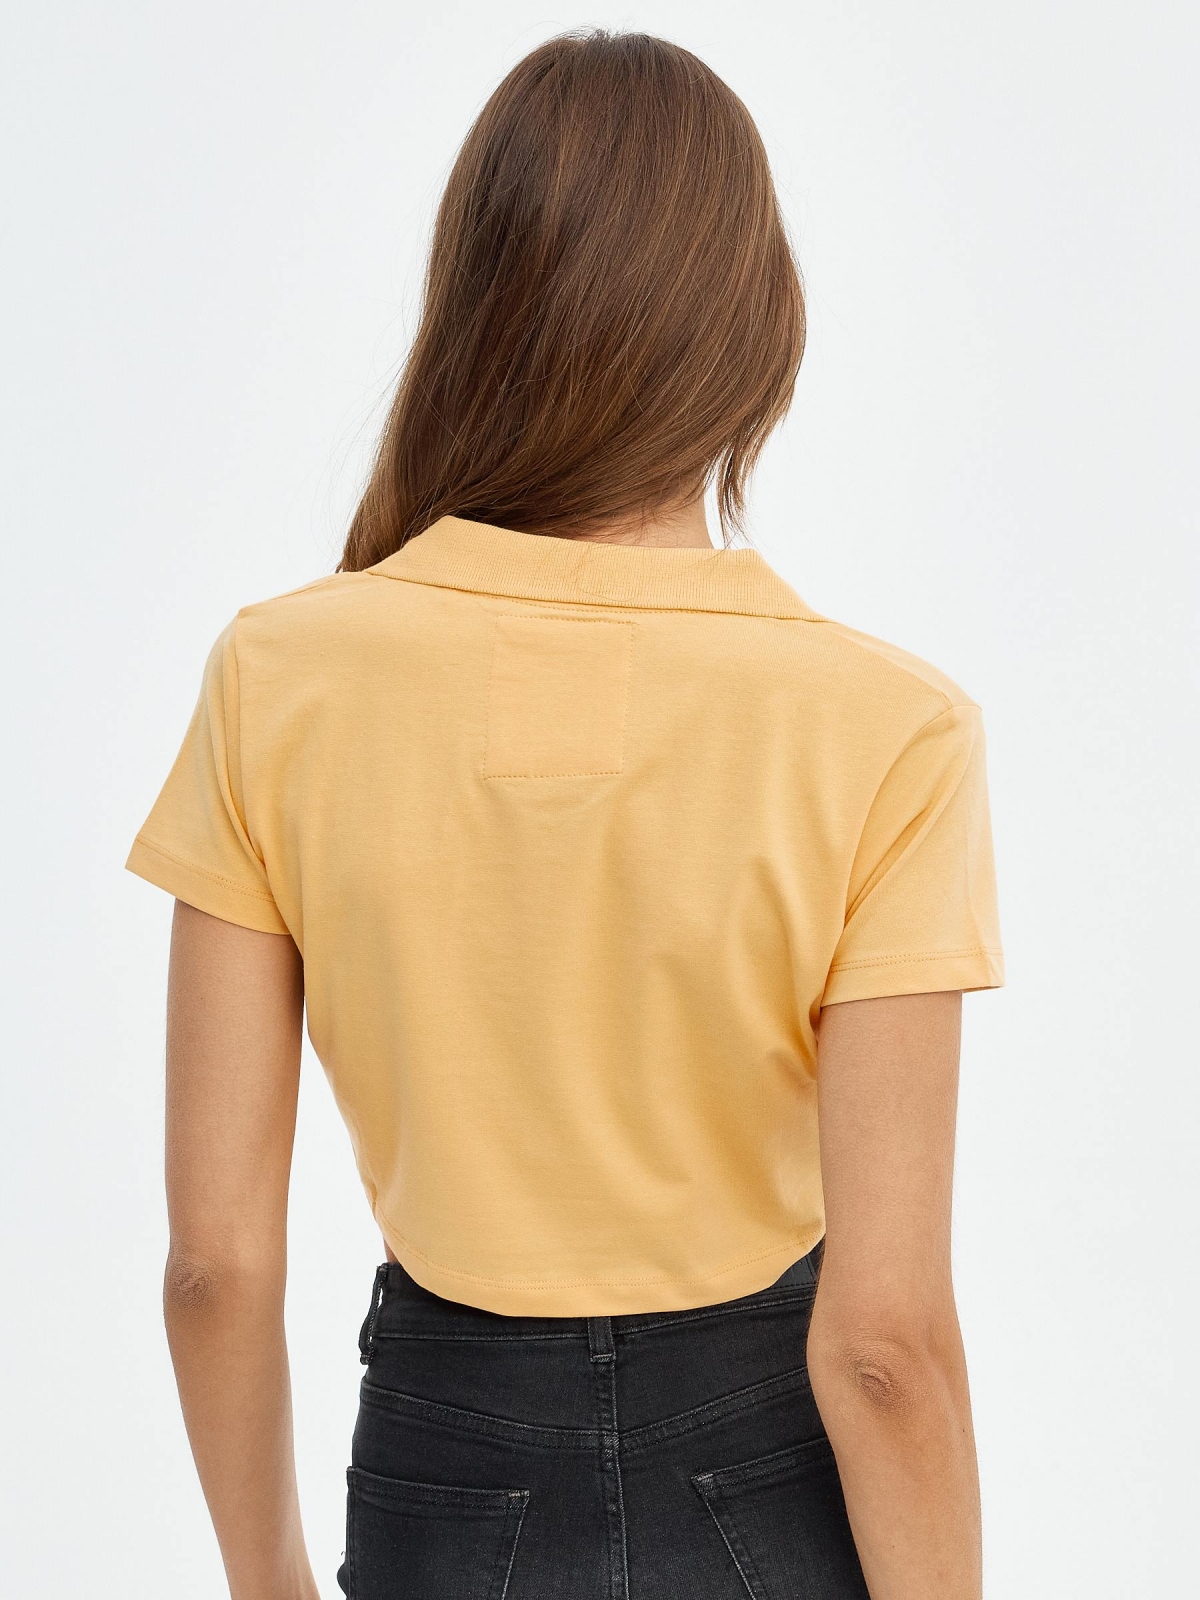 Camiseta crop cuello polo amarillo claro vista media trasera